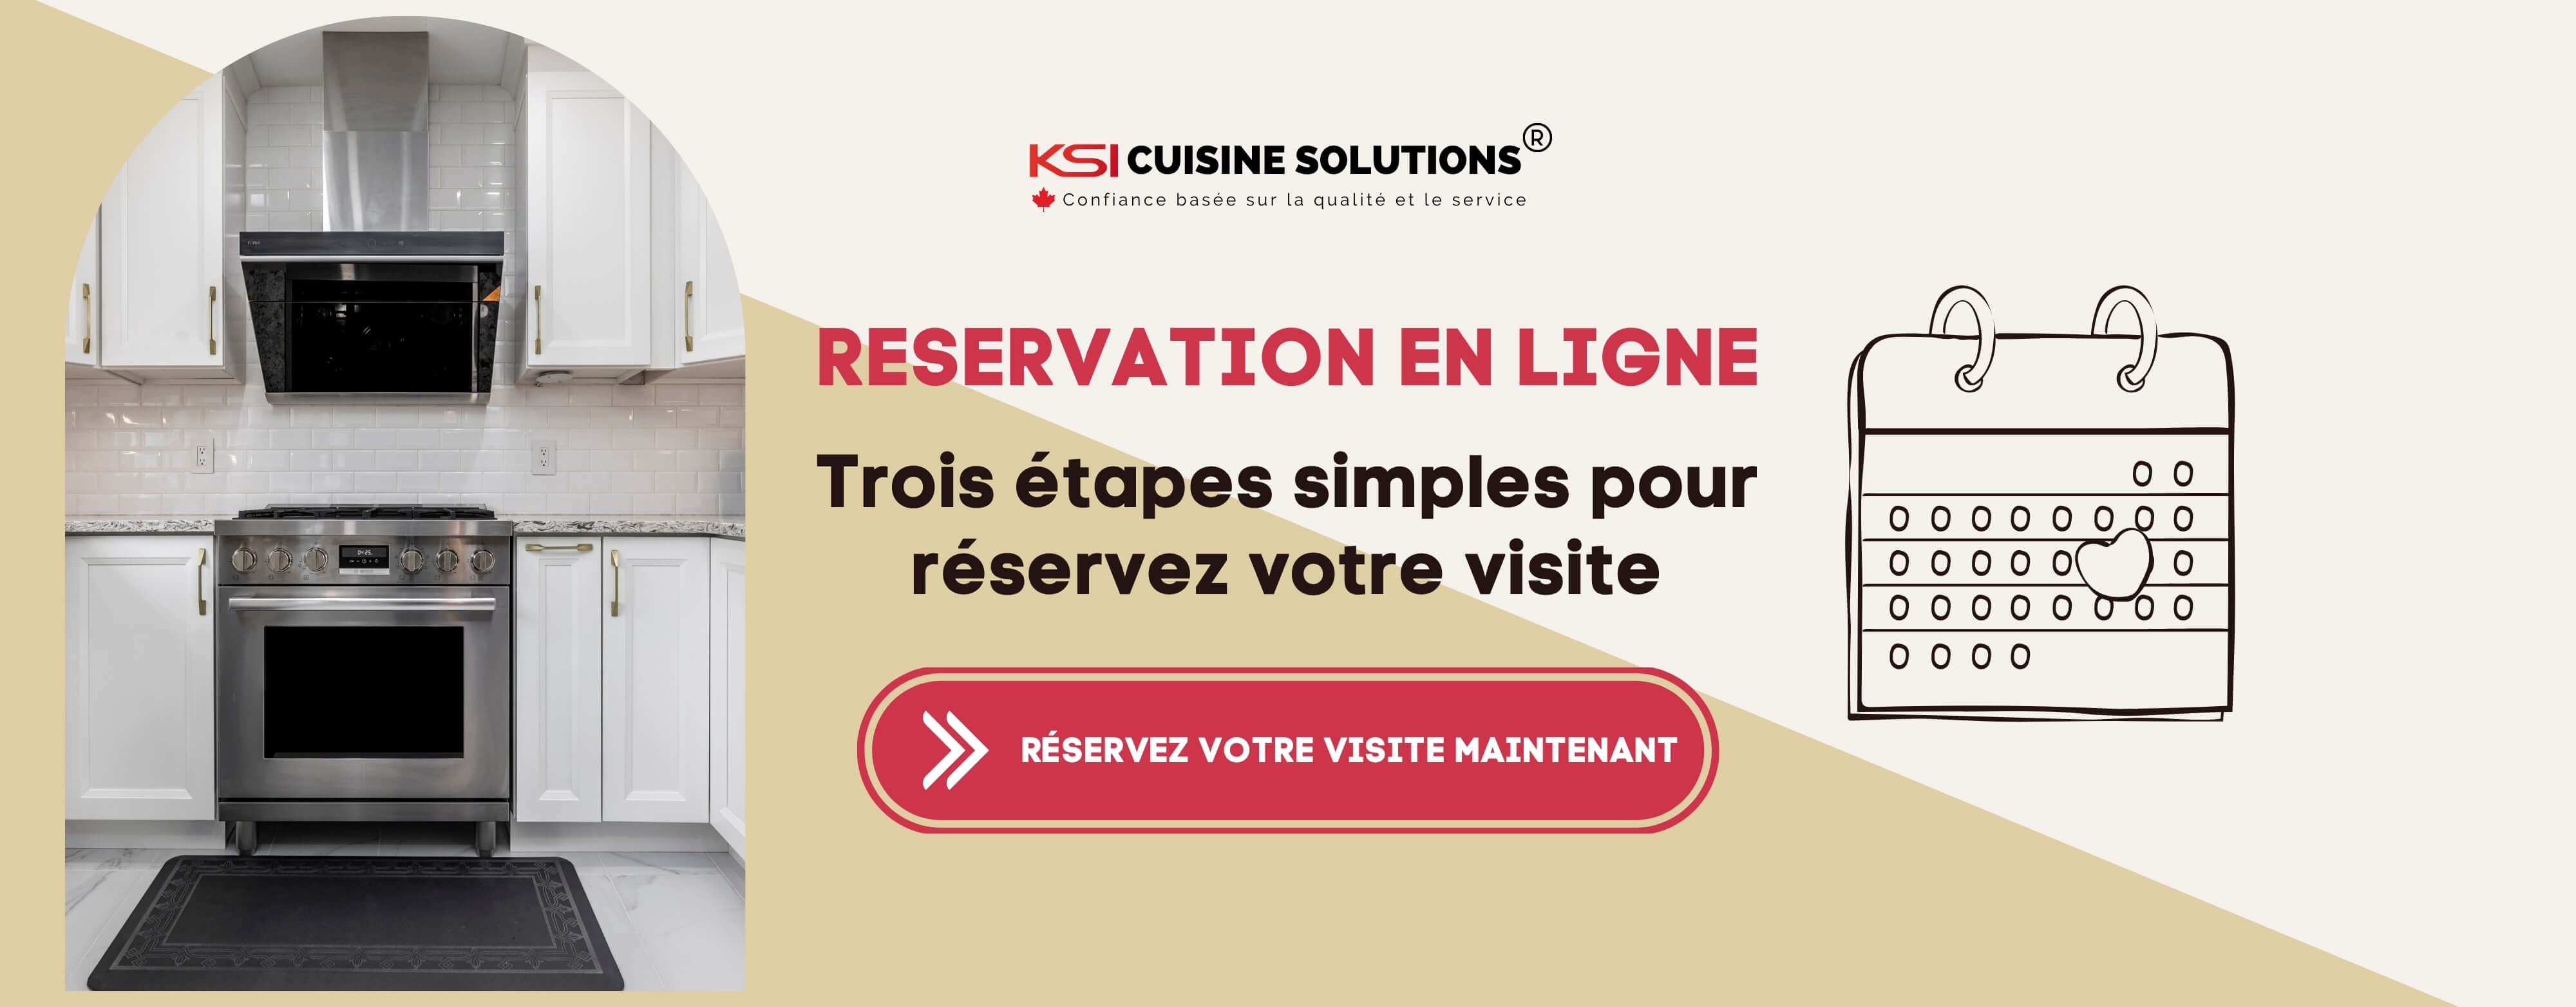 KSI cuisine solutions online Booking fr